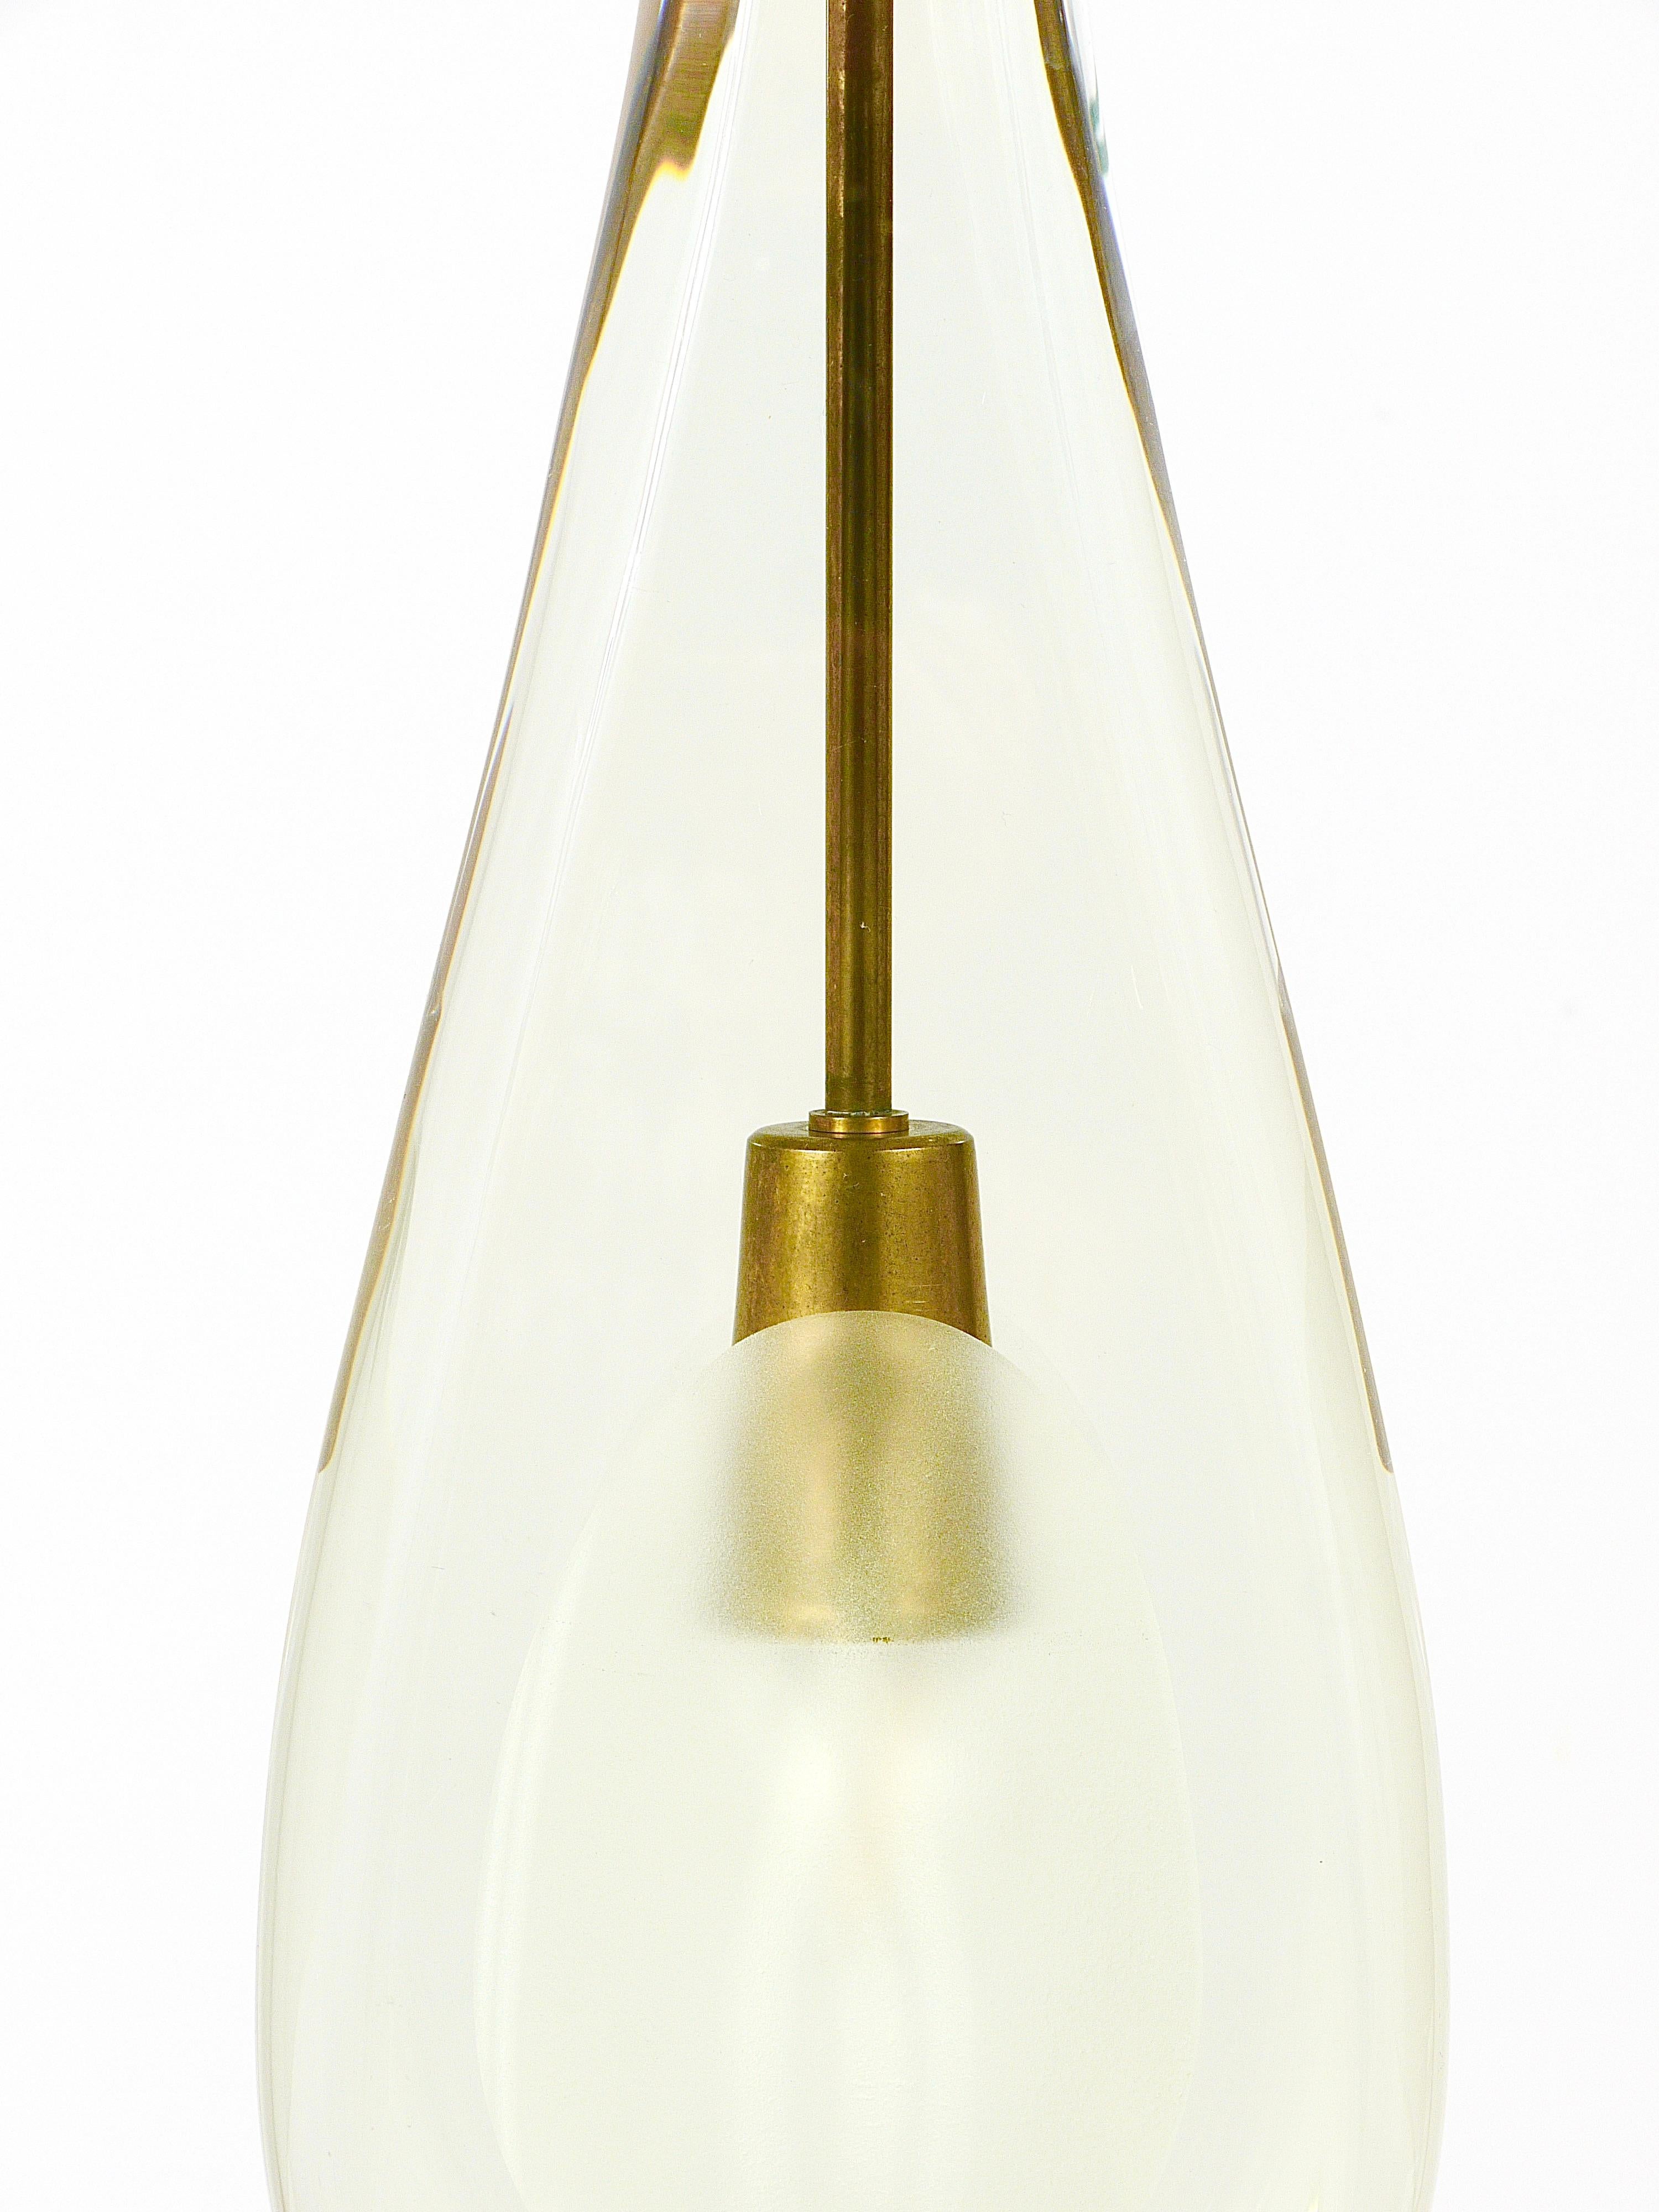 Max Ingrad For Fontana Arte Drop Pendant Lamp, Model 2259, Italy, 1960s For Sale 6